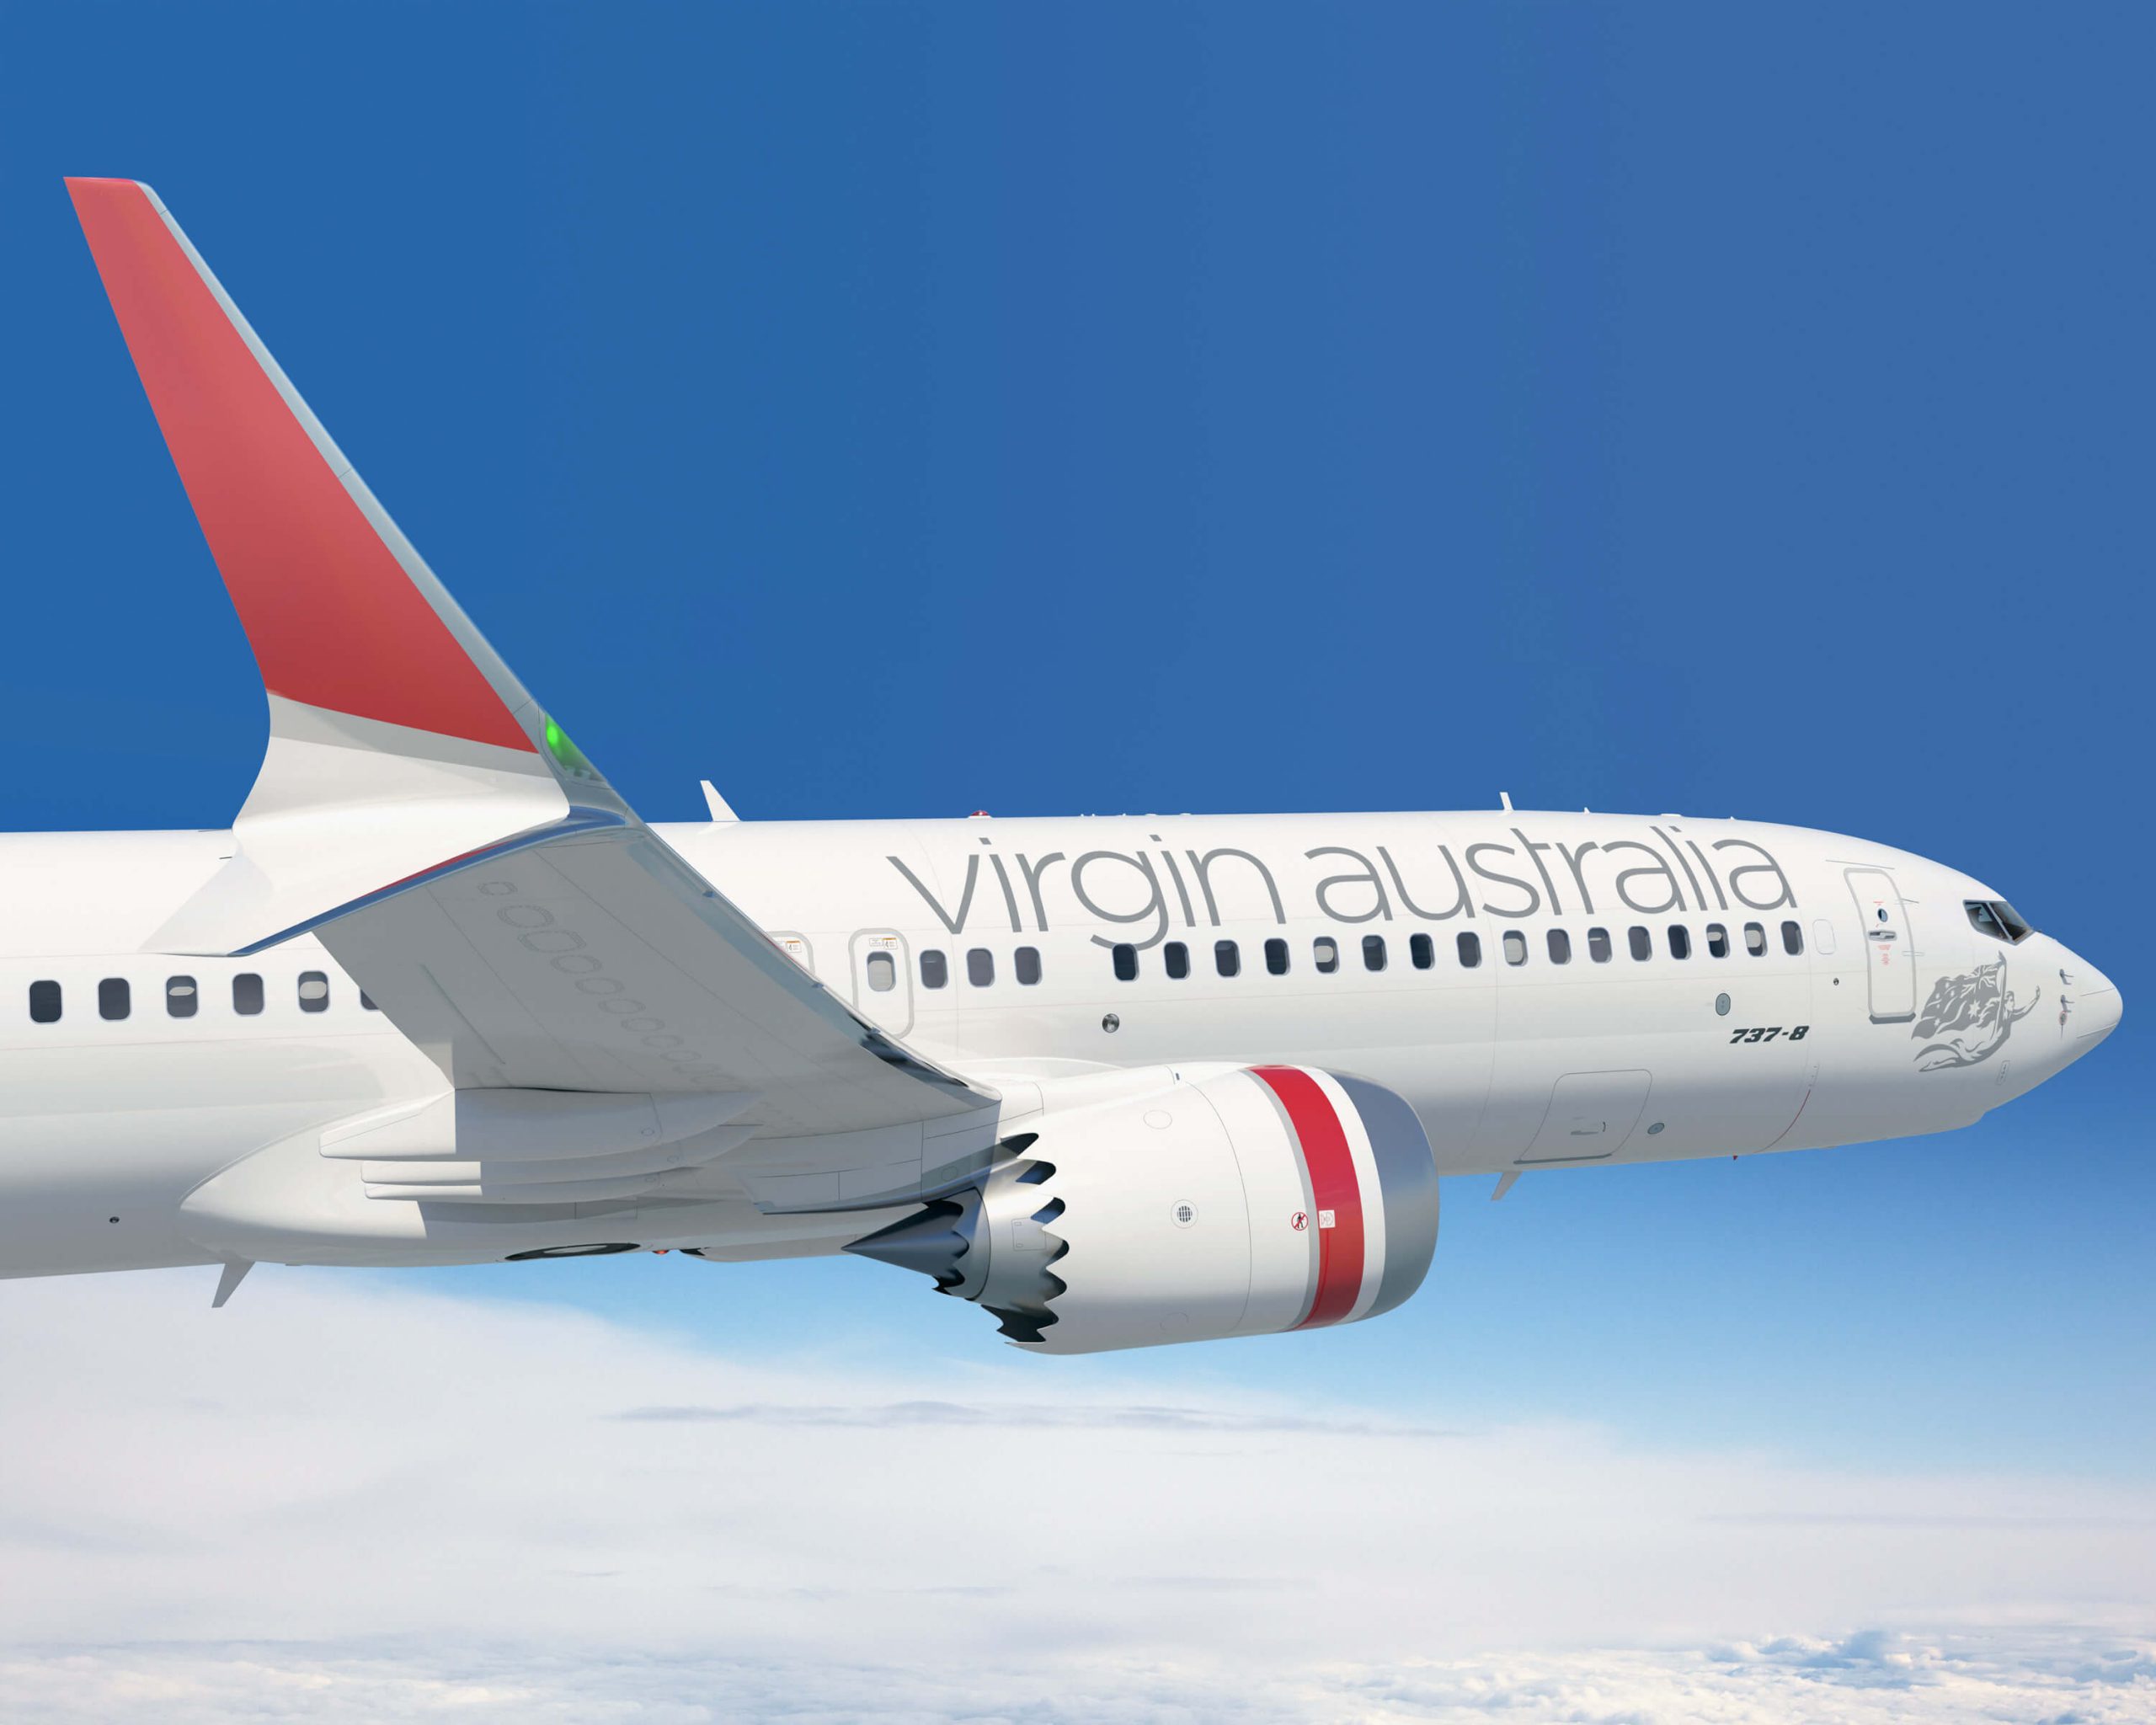 Virgin Australia and Singapore Airlines resume codeshare agreement